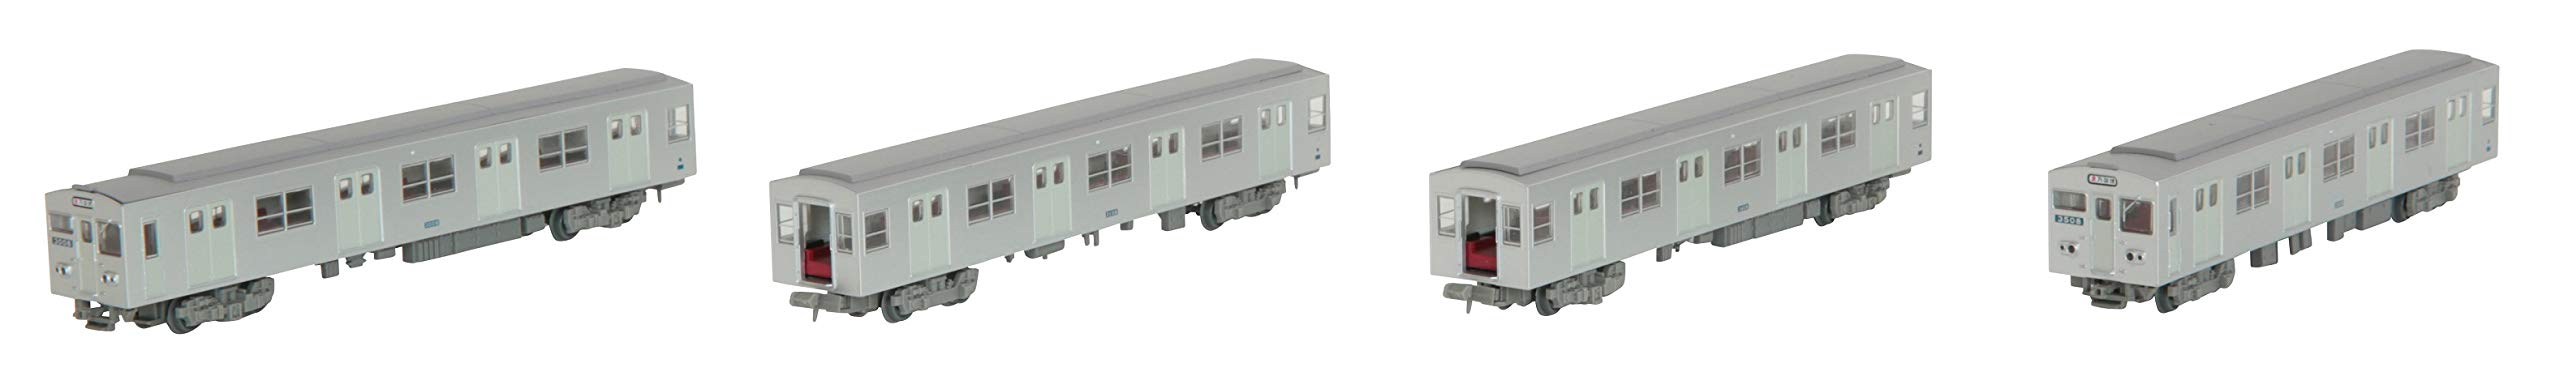 Tomytec 4-Wagen-Set Dioramazubehör - Eisenbahnsammlung Serie 30, Osaka-U-Bahn, Midosuji-Linie